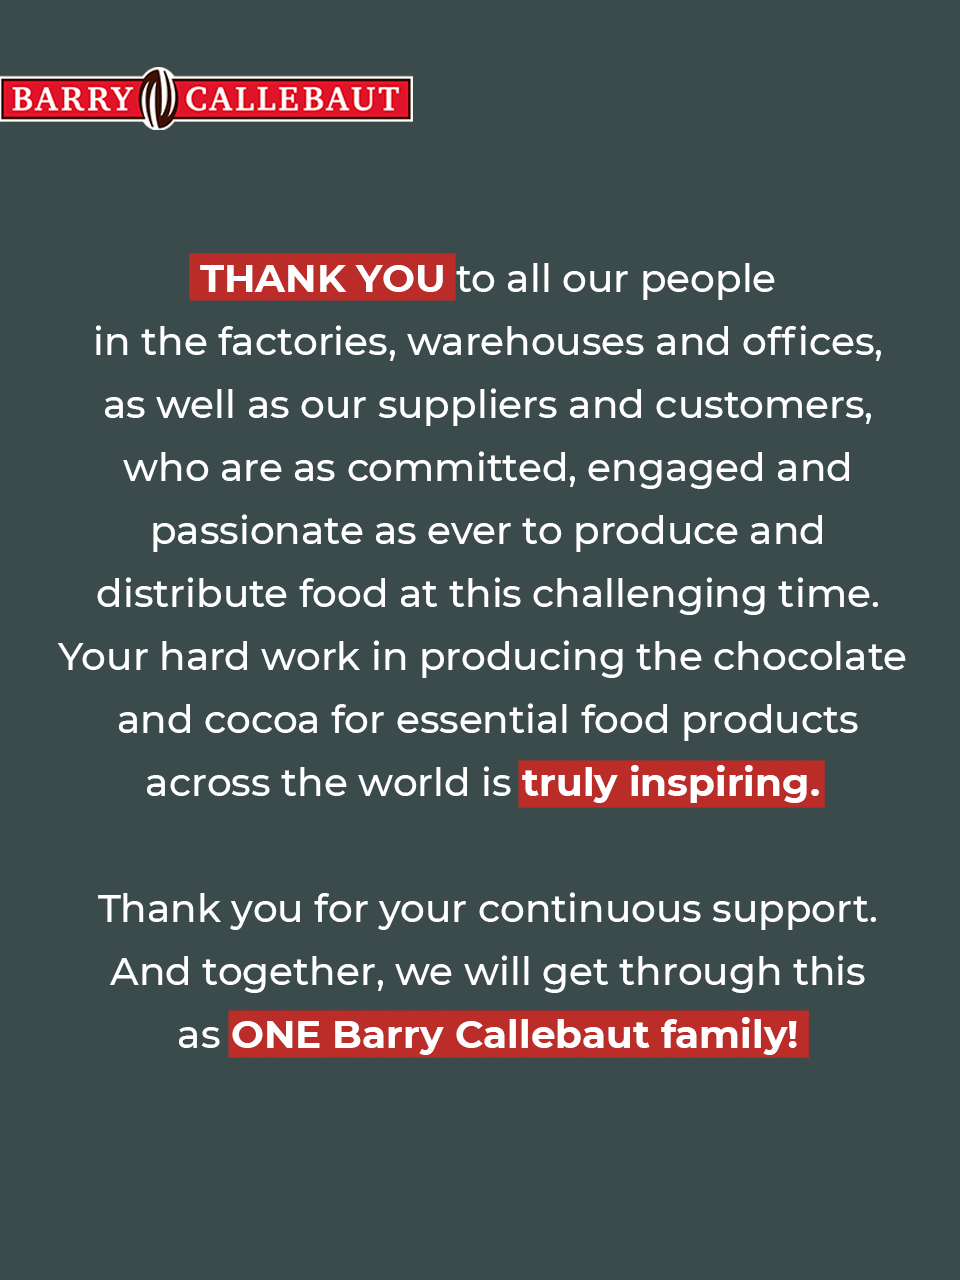 Barry Callebaut Cares During The Coronavirus Pandemic